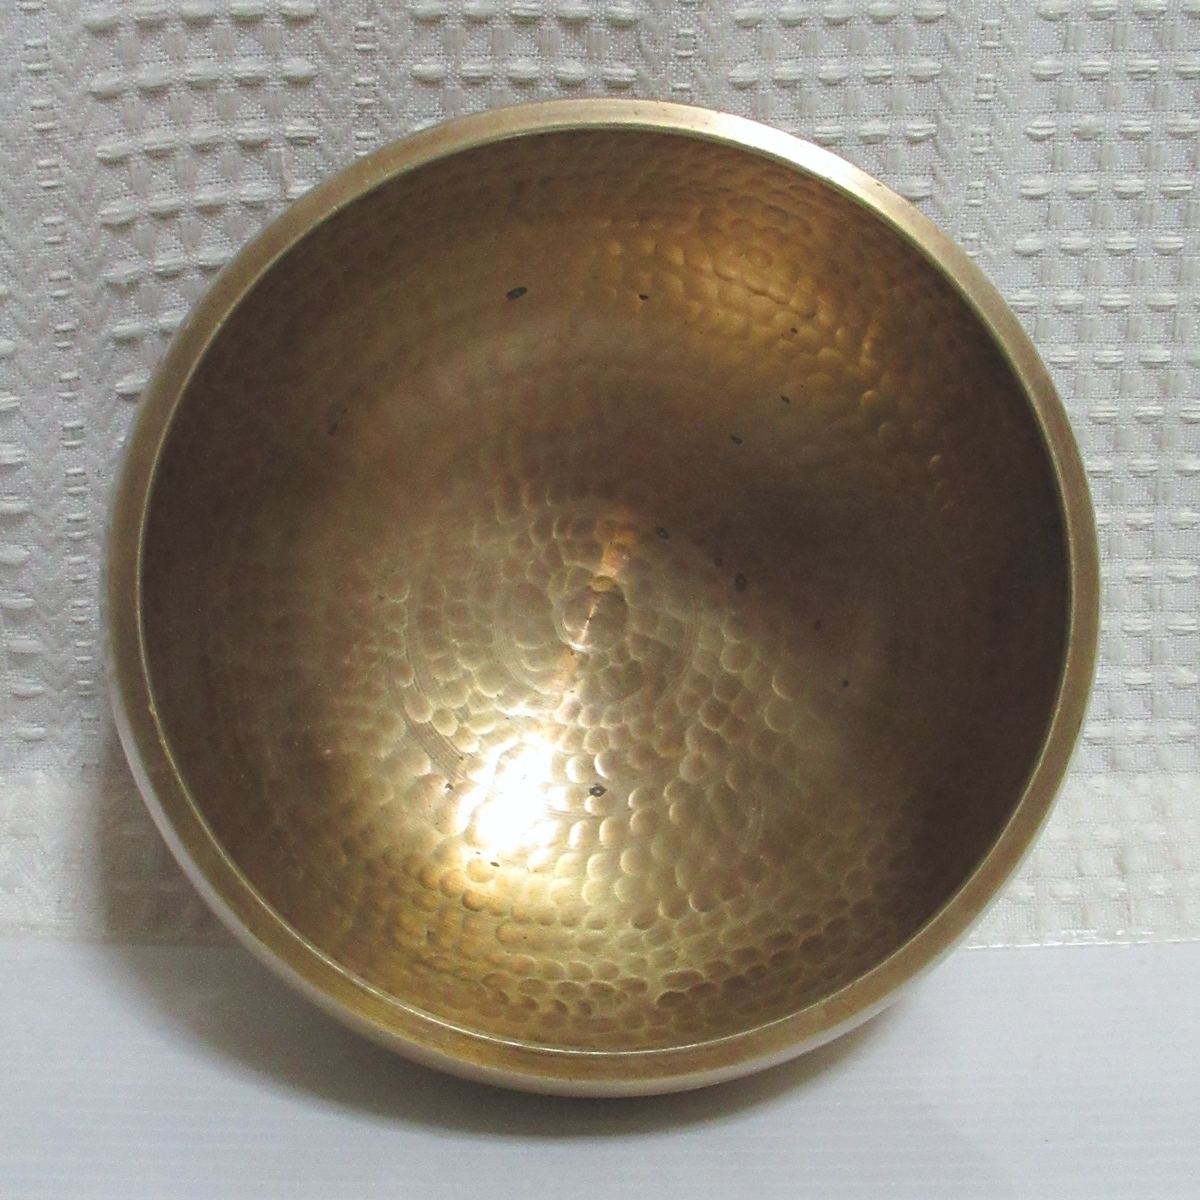 sin silver g bowl ( hammer eyes ) 638g healing tea kla bowl .. law .